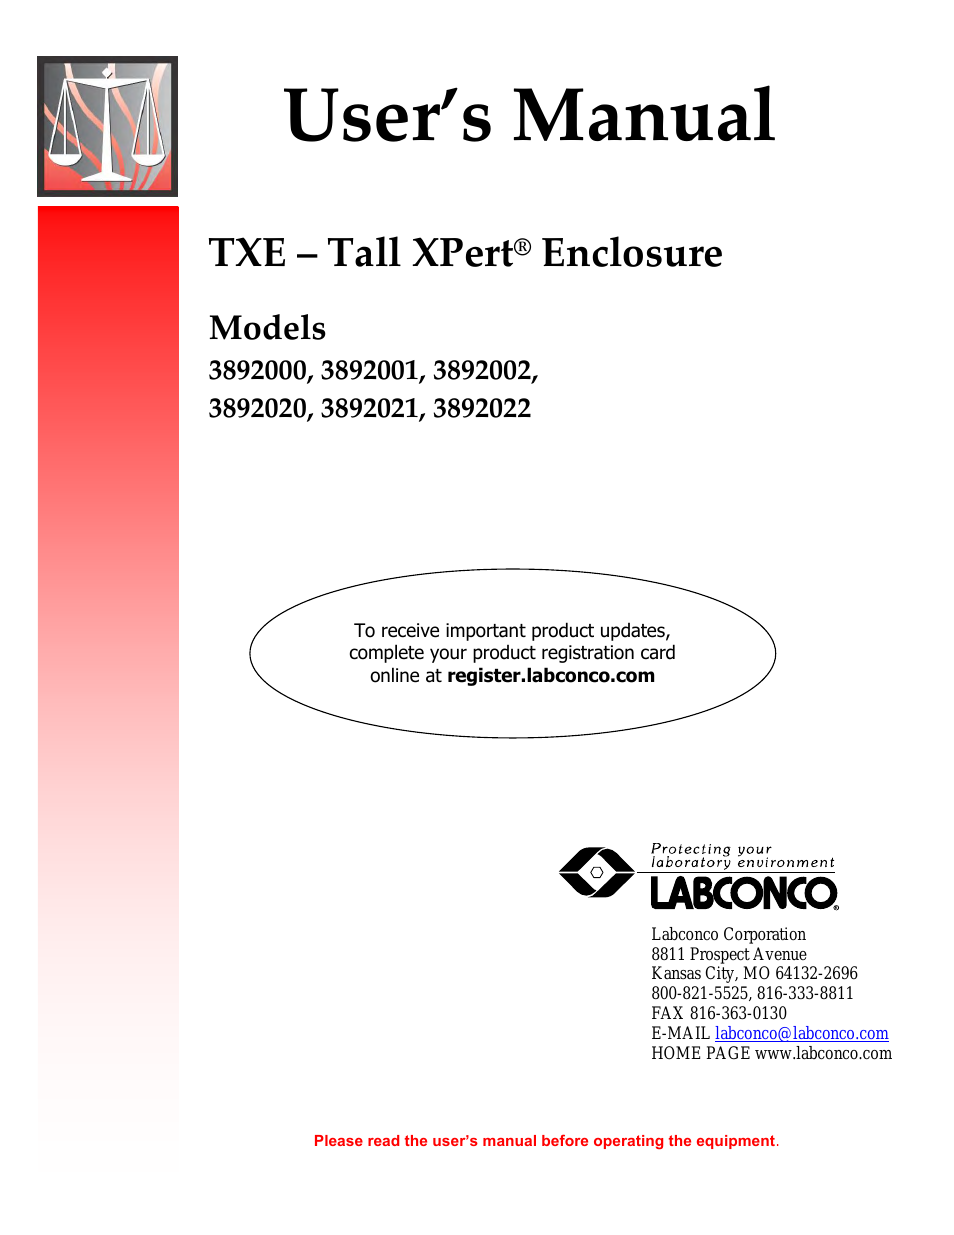 TXE Tall XPerEnclosure 3892001